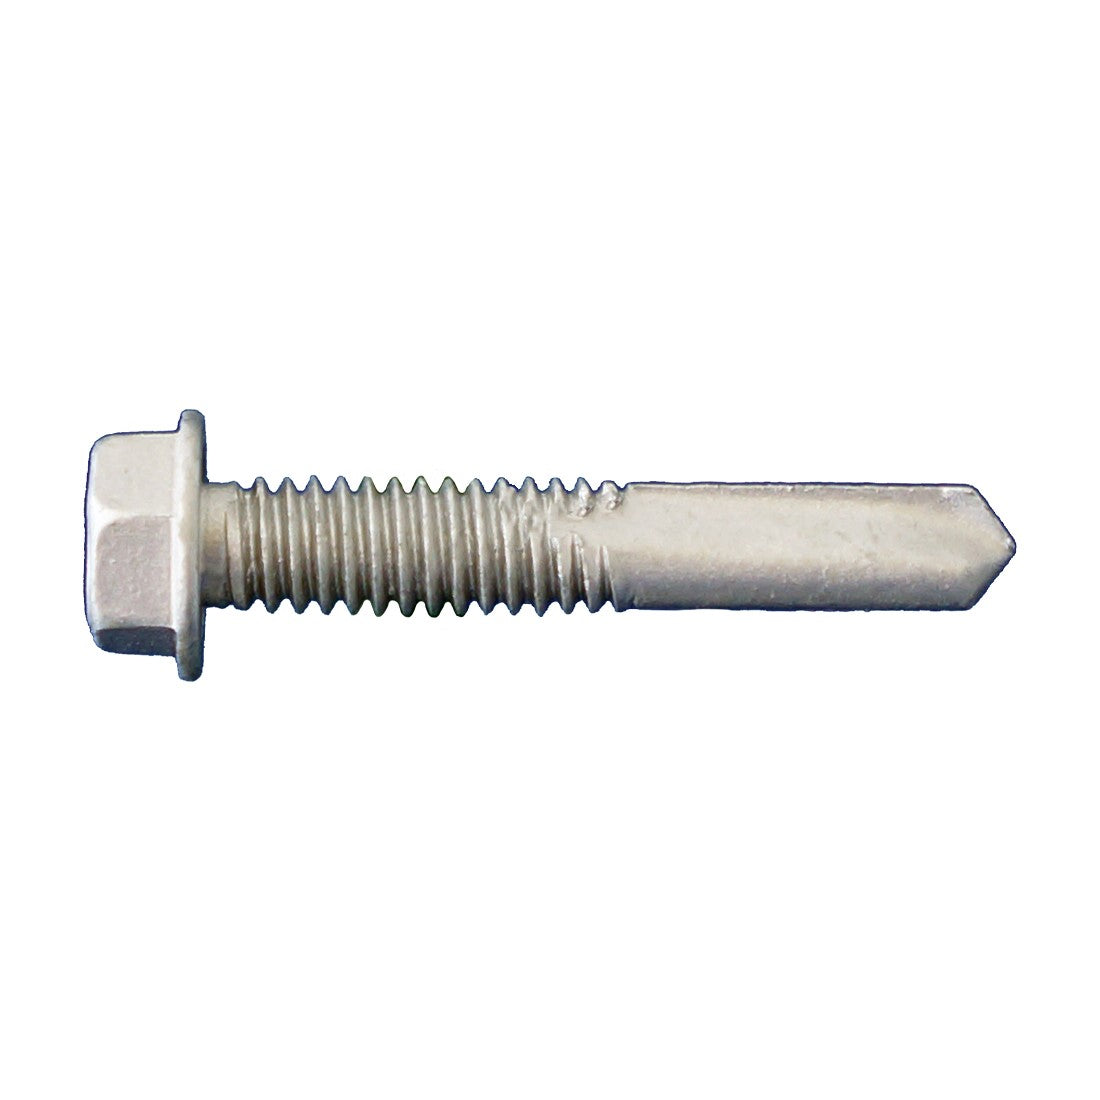 14 inch20 x 7 inch SelfDrilling Metal Screw w#5 Point Hex Head DaggerGuard Coating Pkg 250